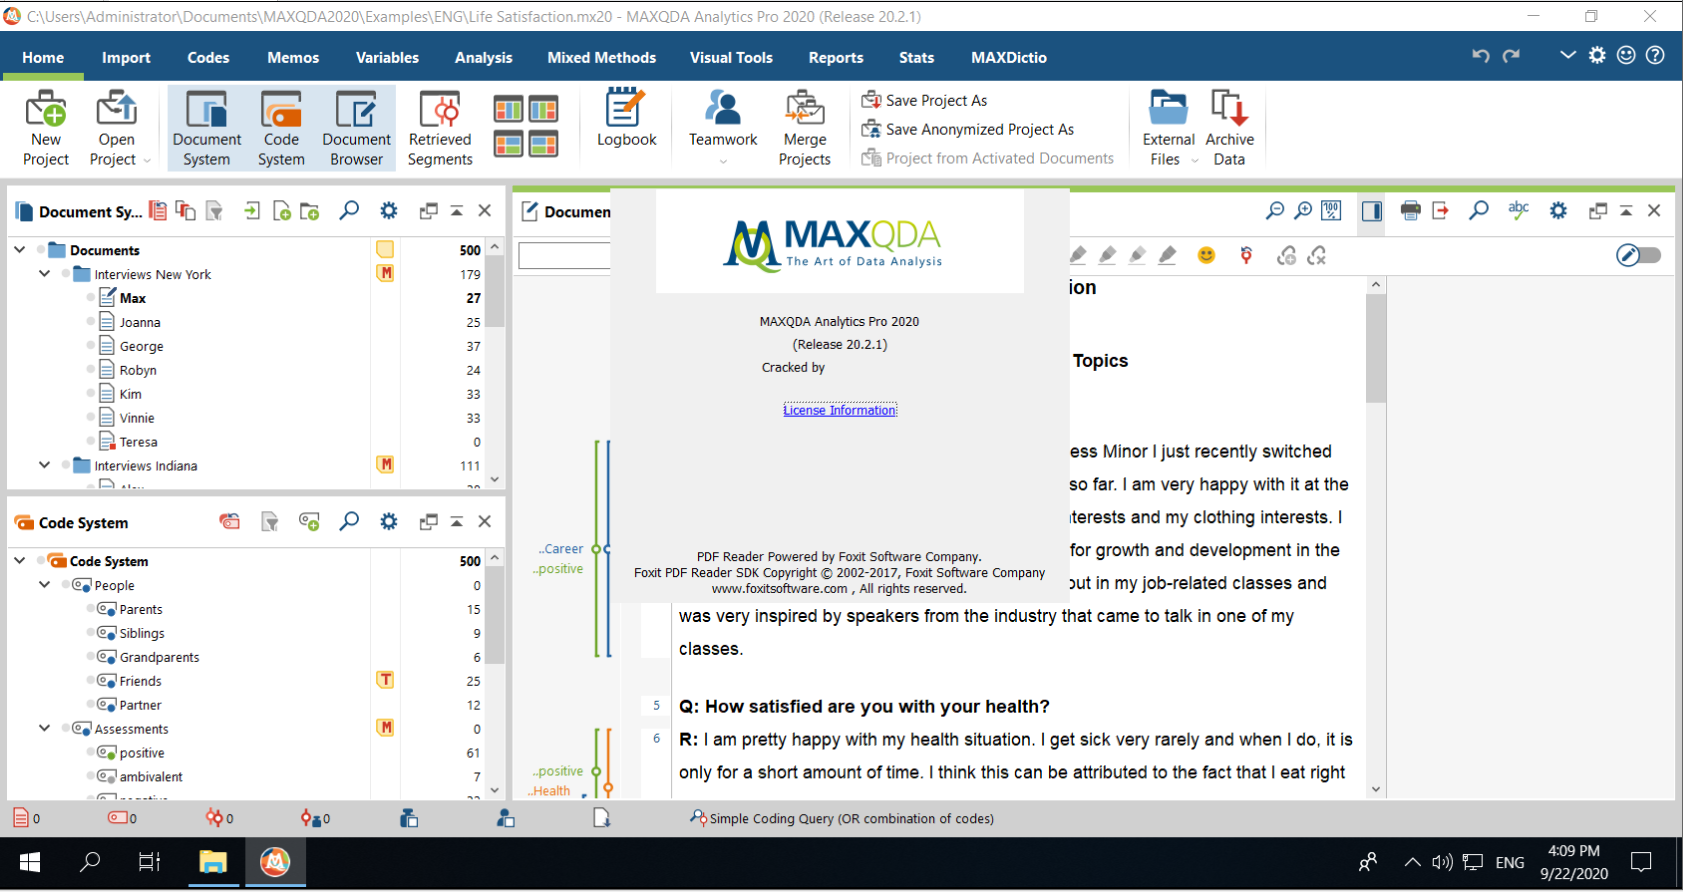 Working with MAXQDA Analytics Pro 2020 R20.2.1 full license